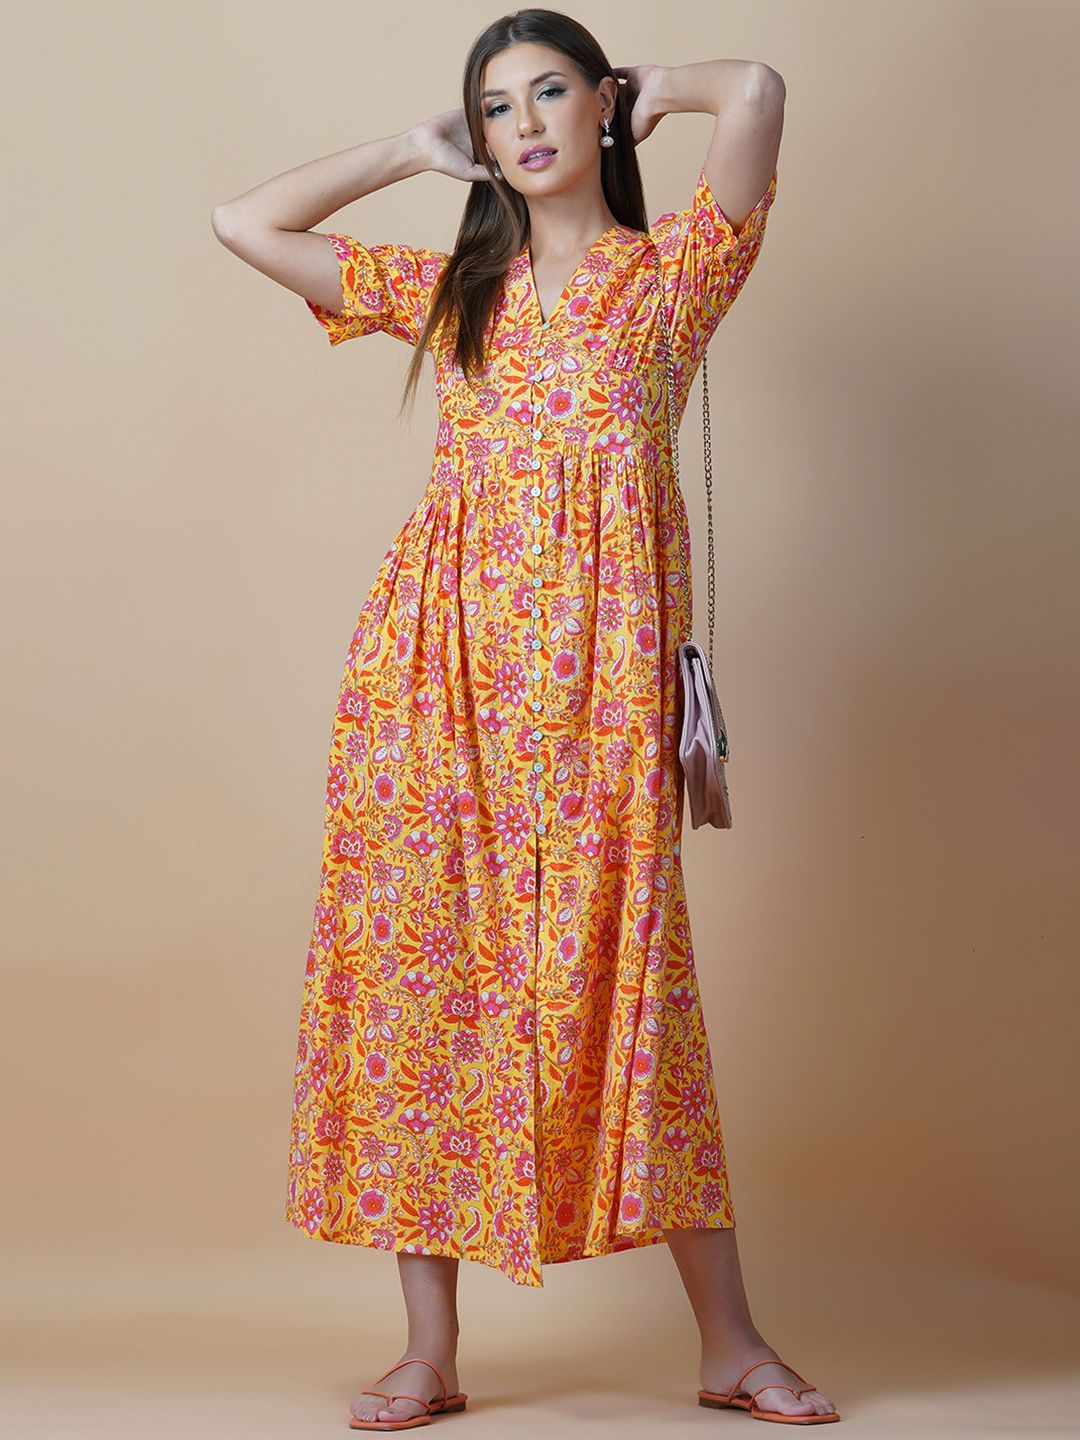 Twilldor Yellow Cotton Floral Ethnic Maxi Dress Price in India